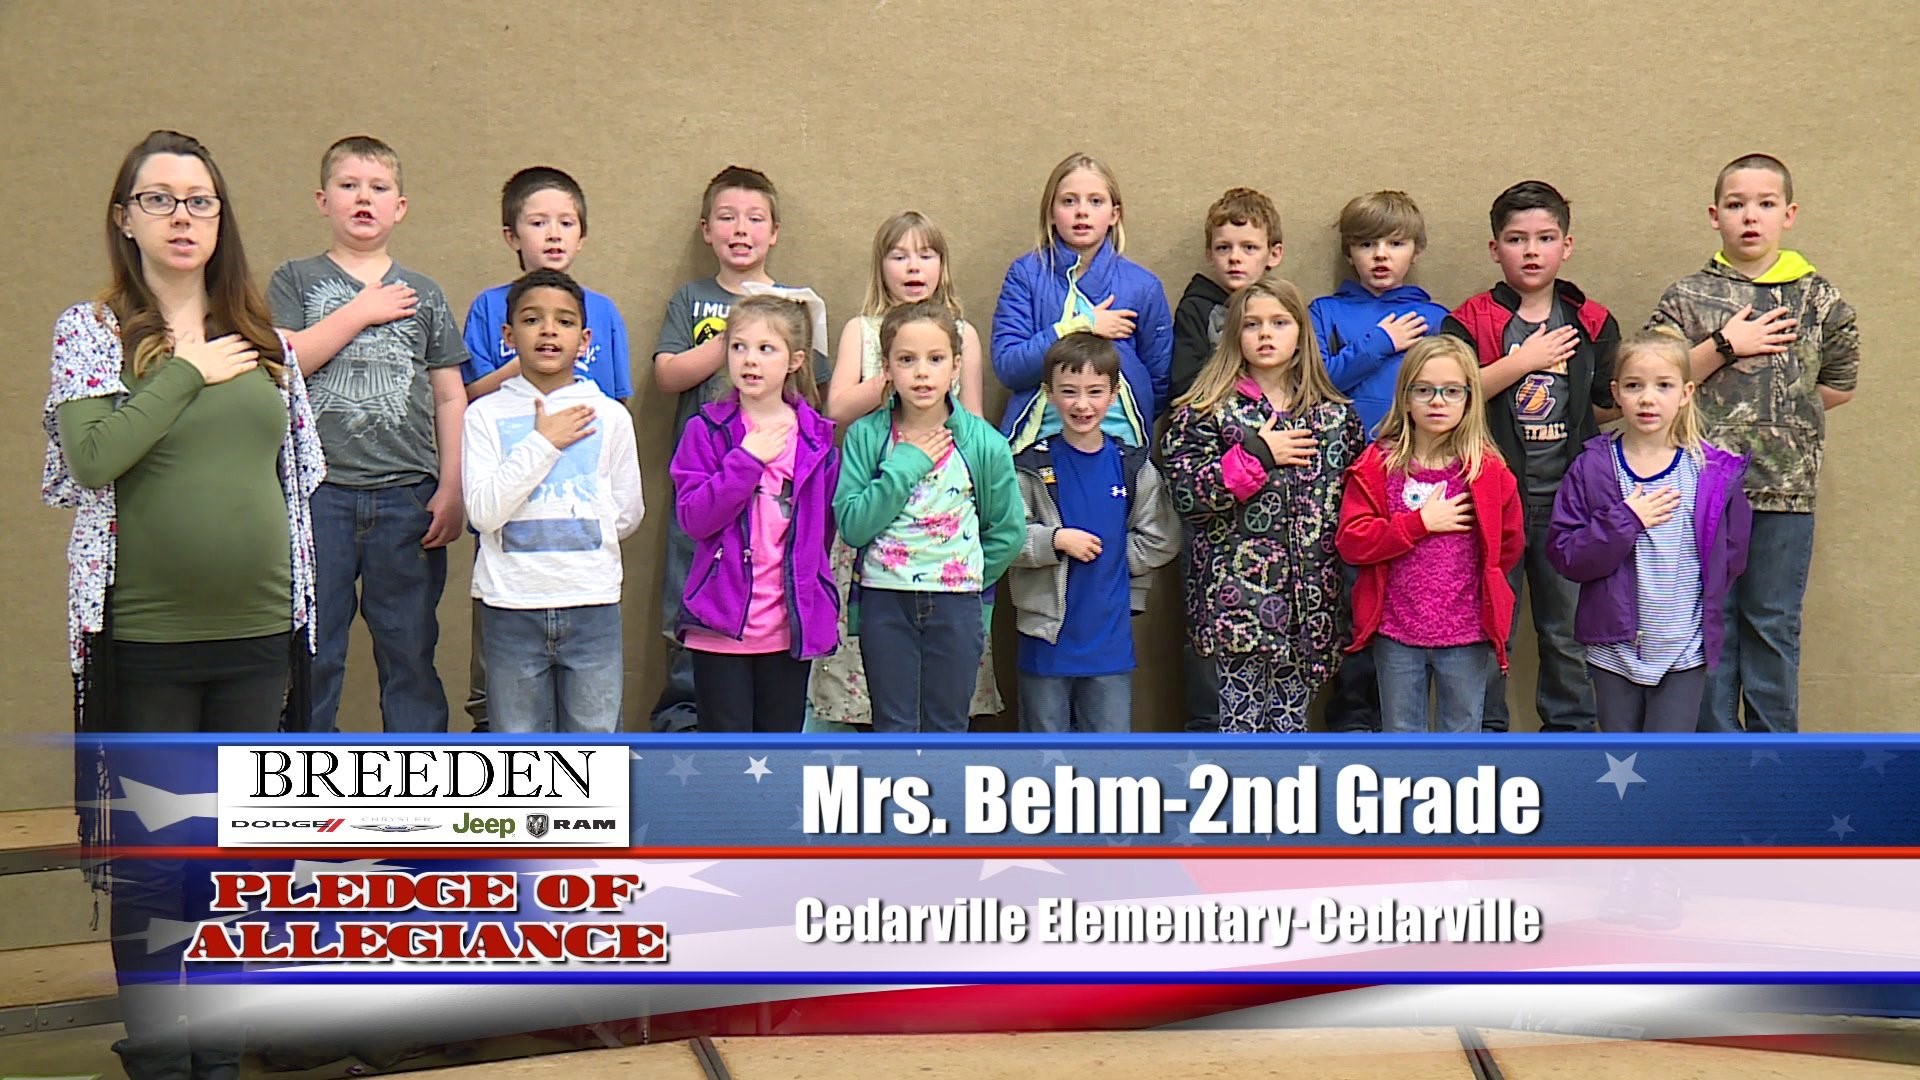 Mrs. Behm  2nd Grade  Cedarville Elementary - Cedarville